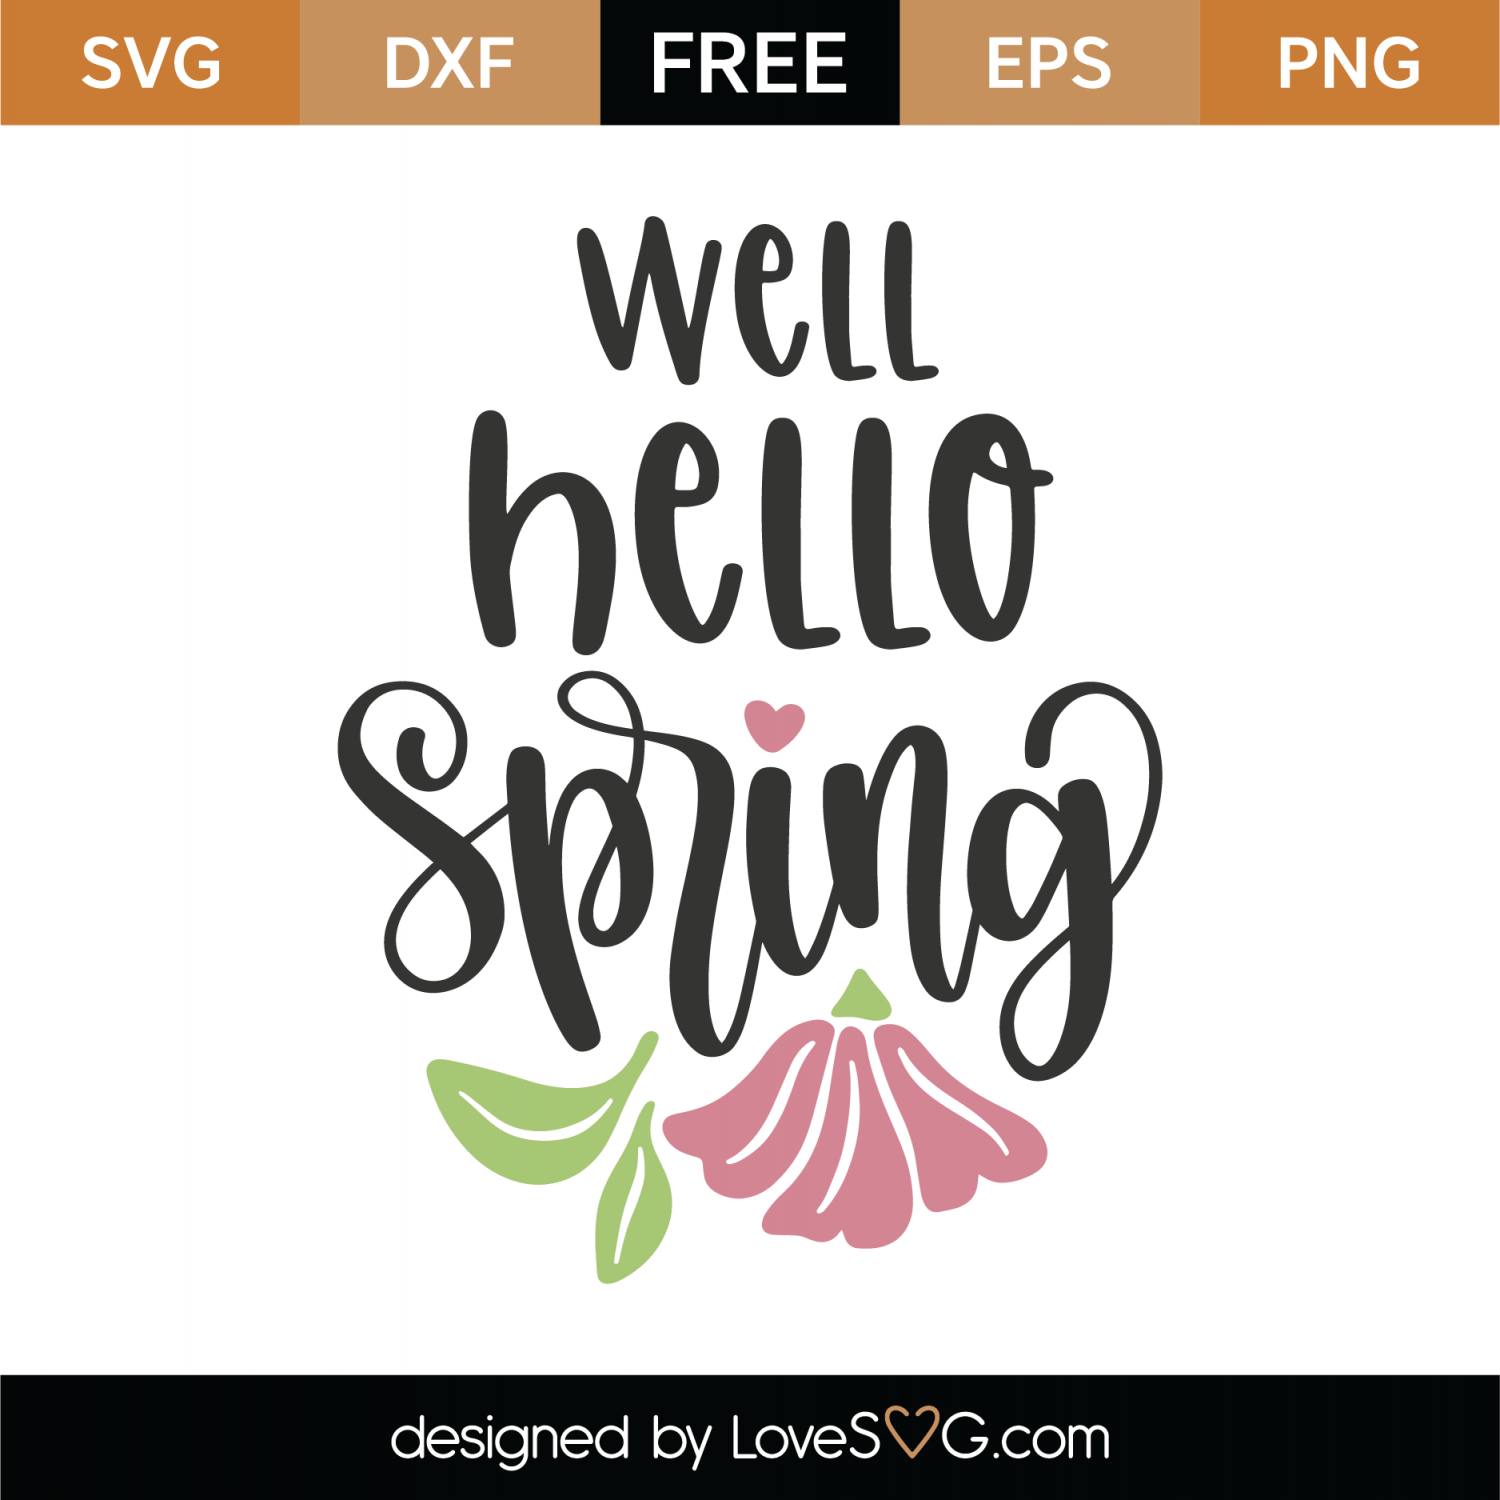 Download Free Well Hello Spring SVG Cut File | Lovesvg.com